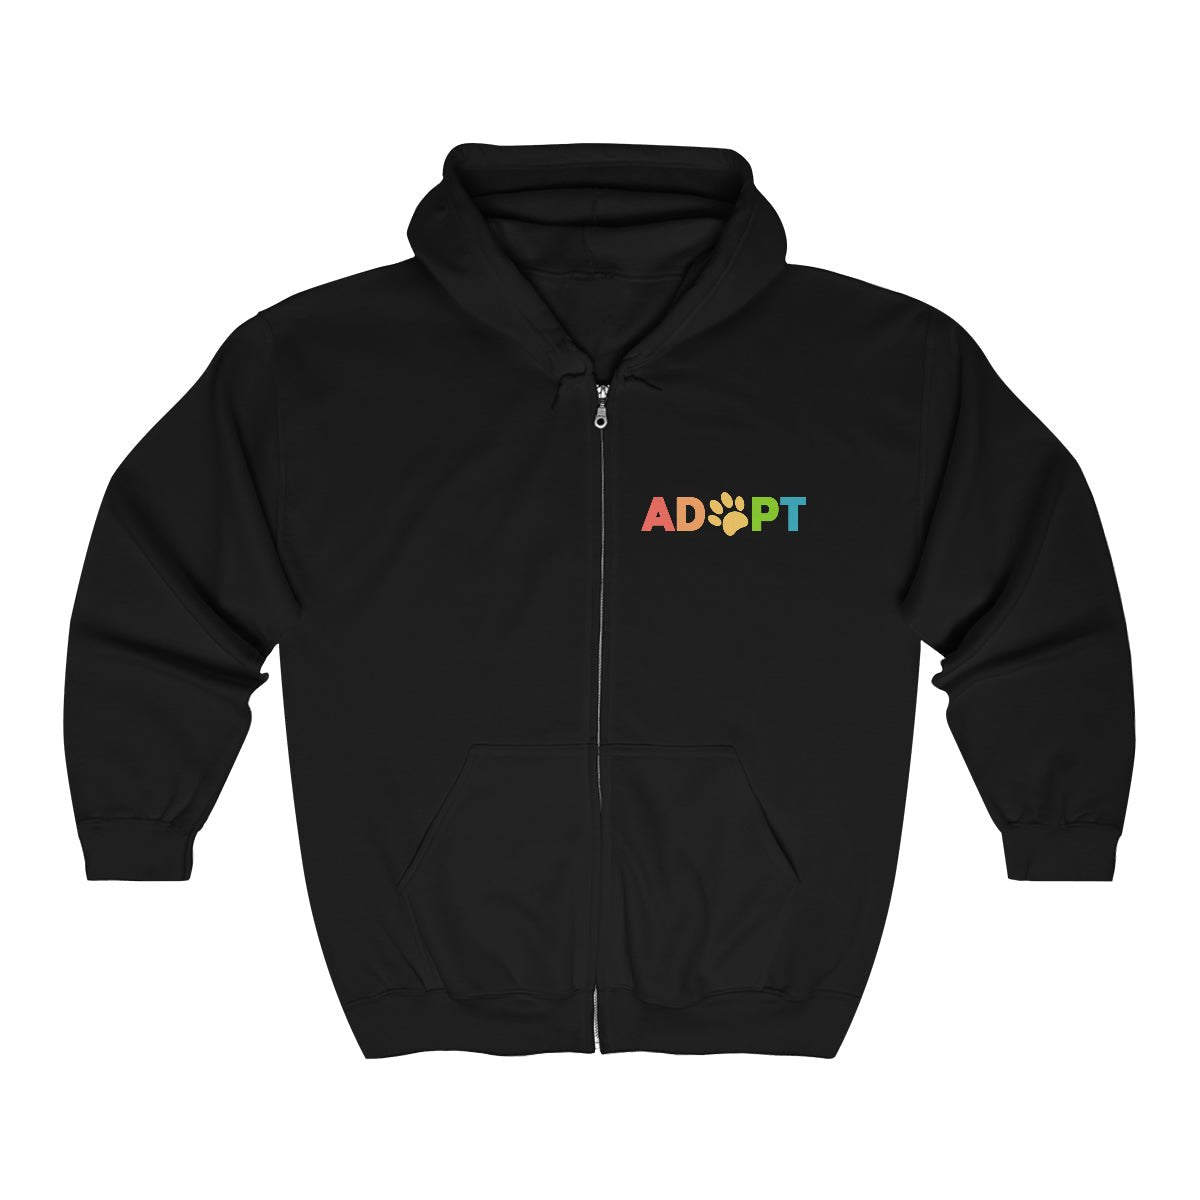 Adopt Rainbow | Zip-up Sweatshirt - Detezi Designs-11351884825167809774